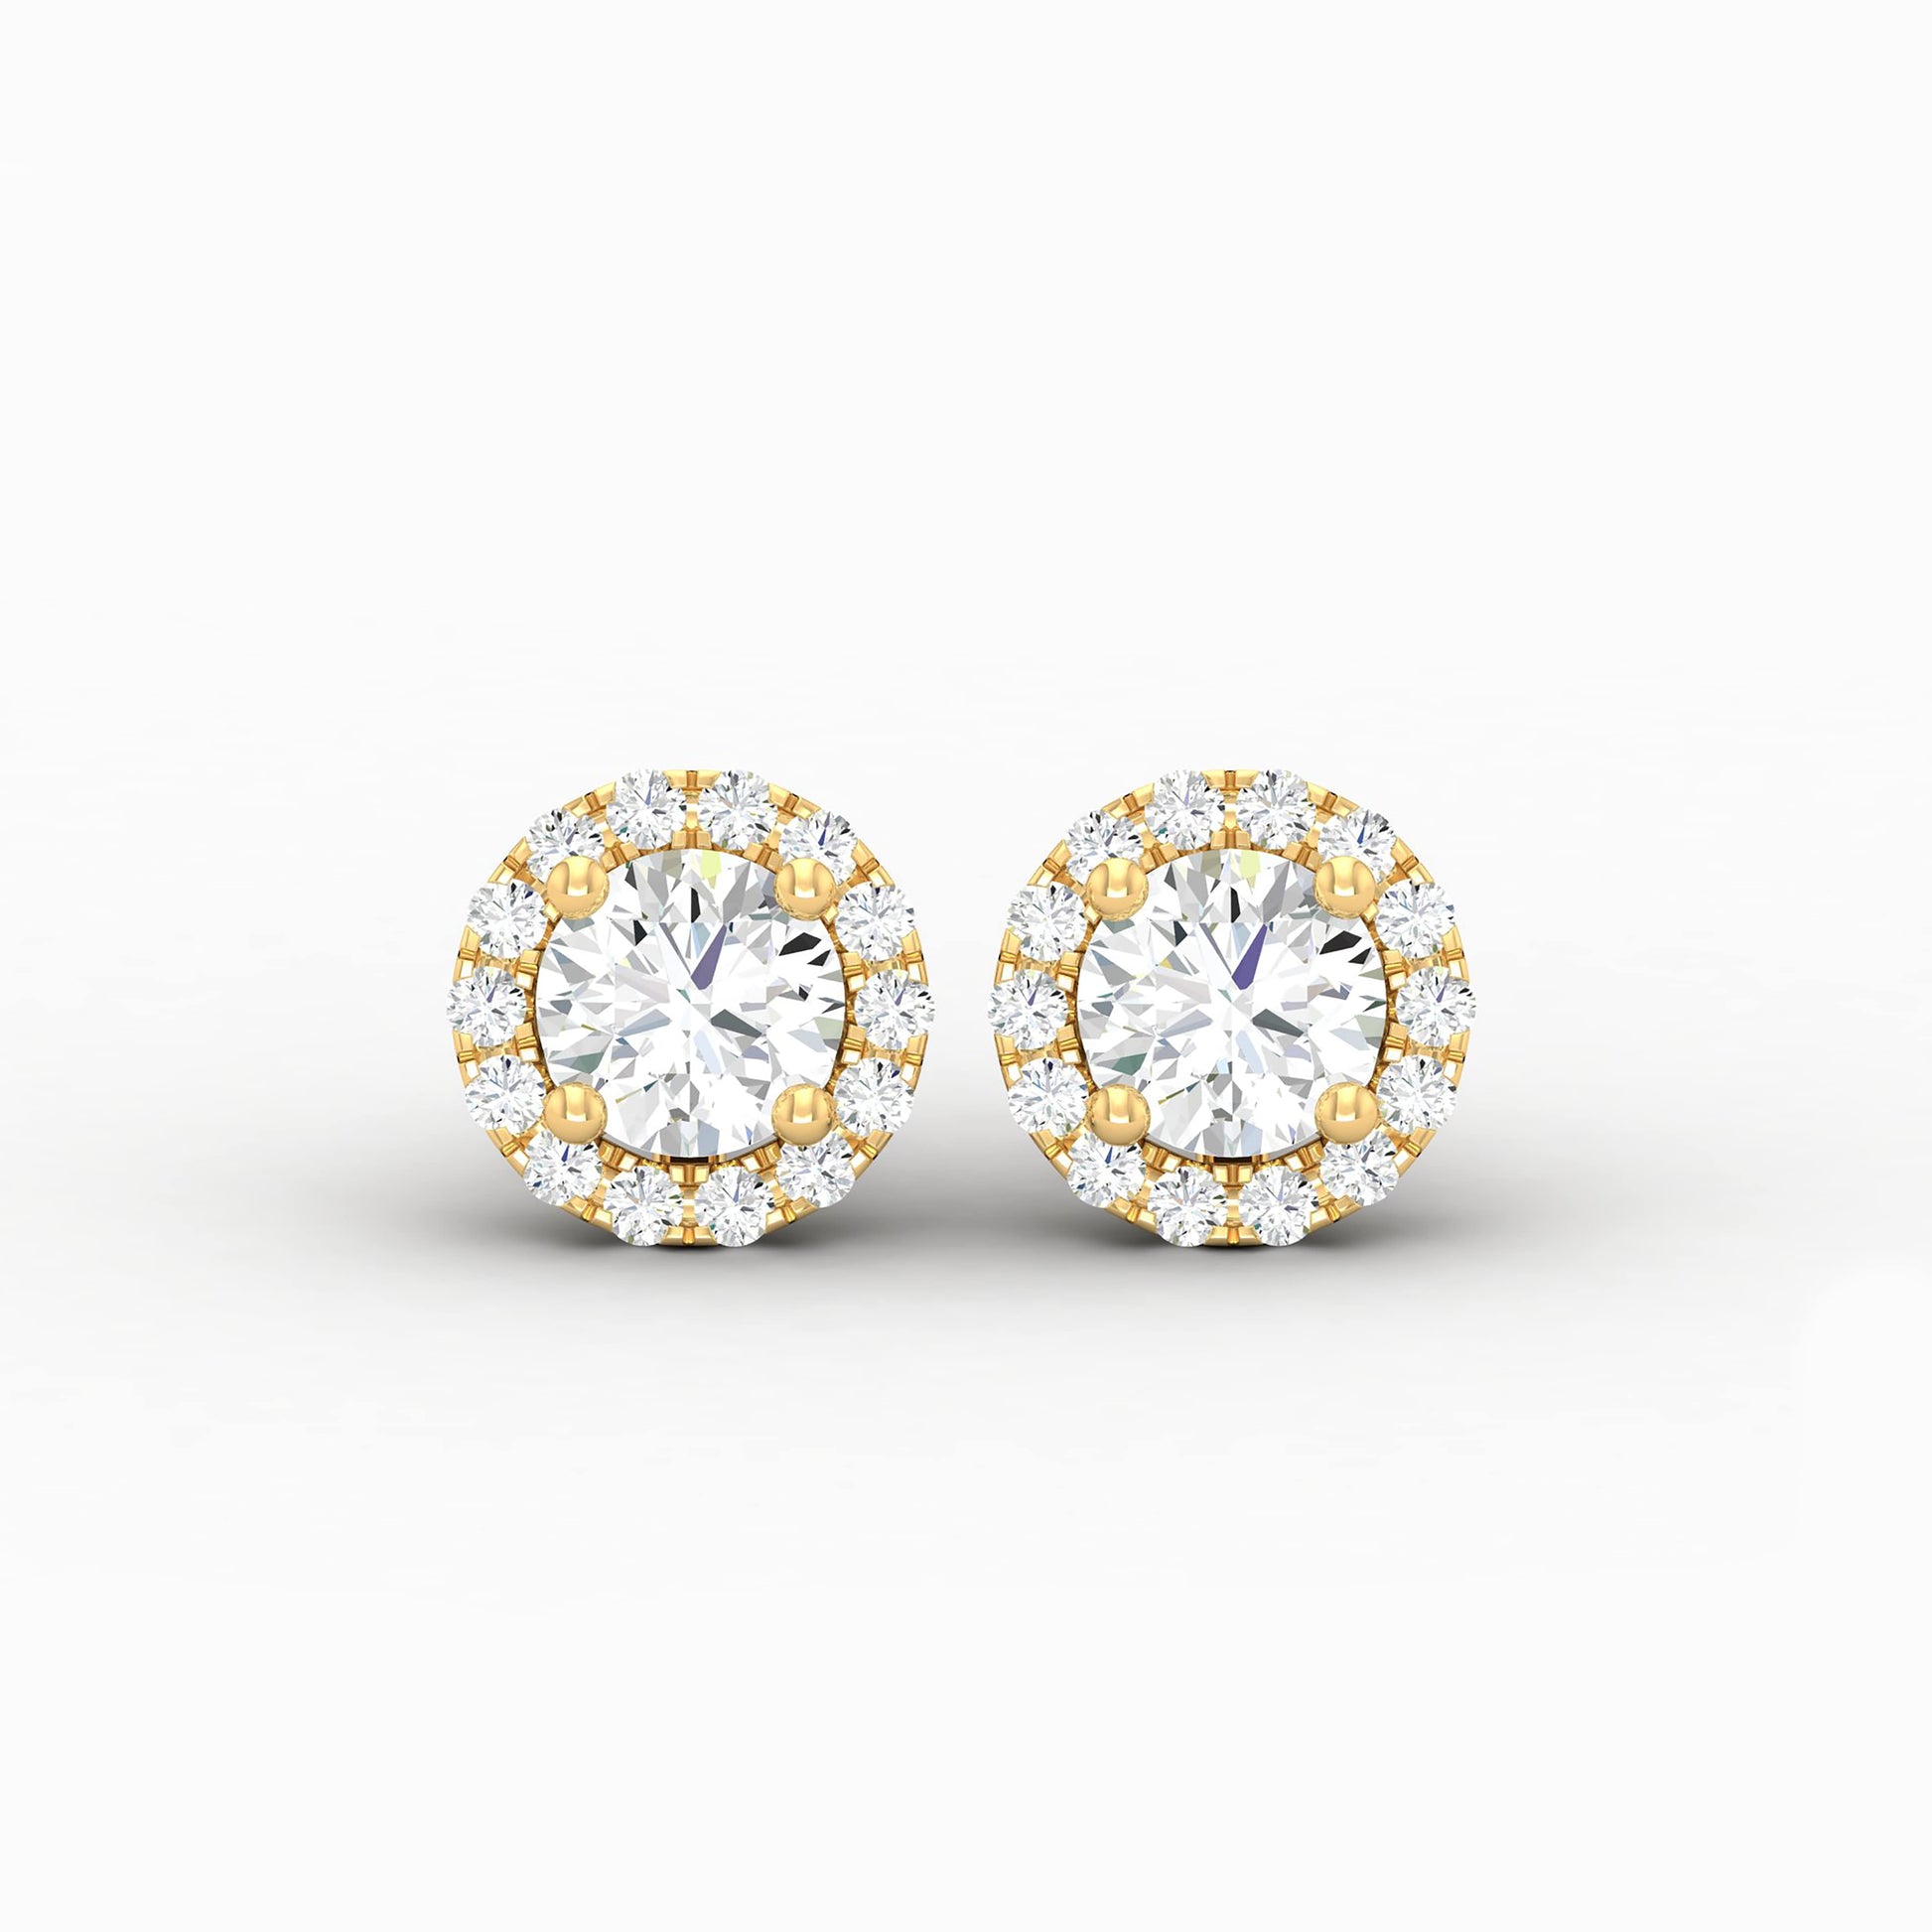 Round brilliant diamond earrings